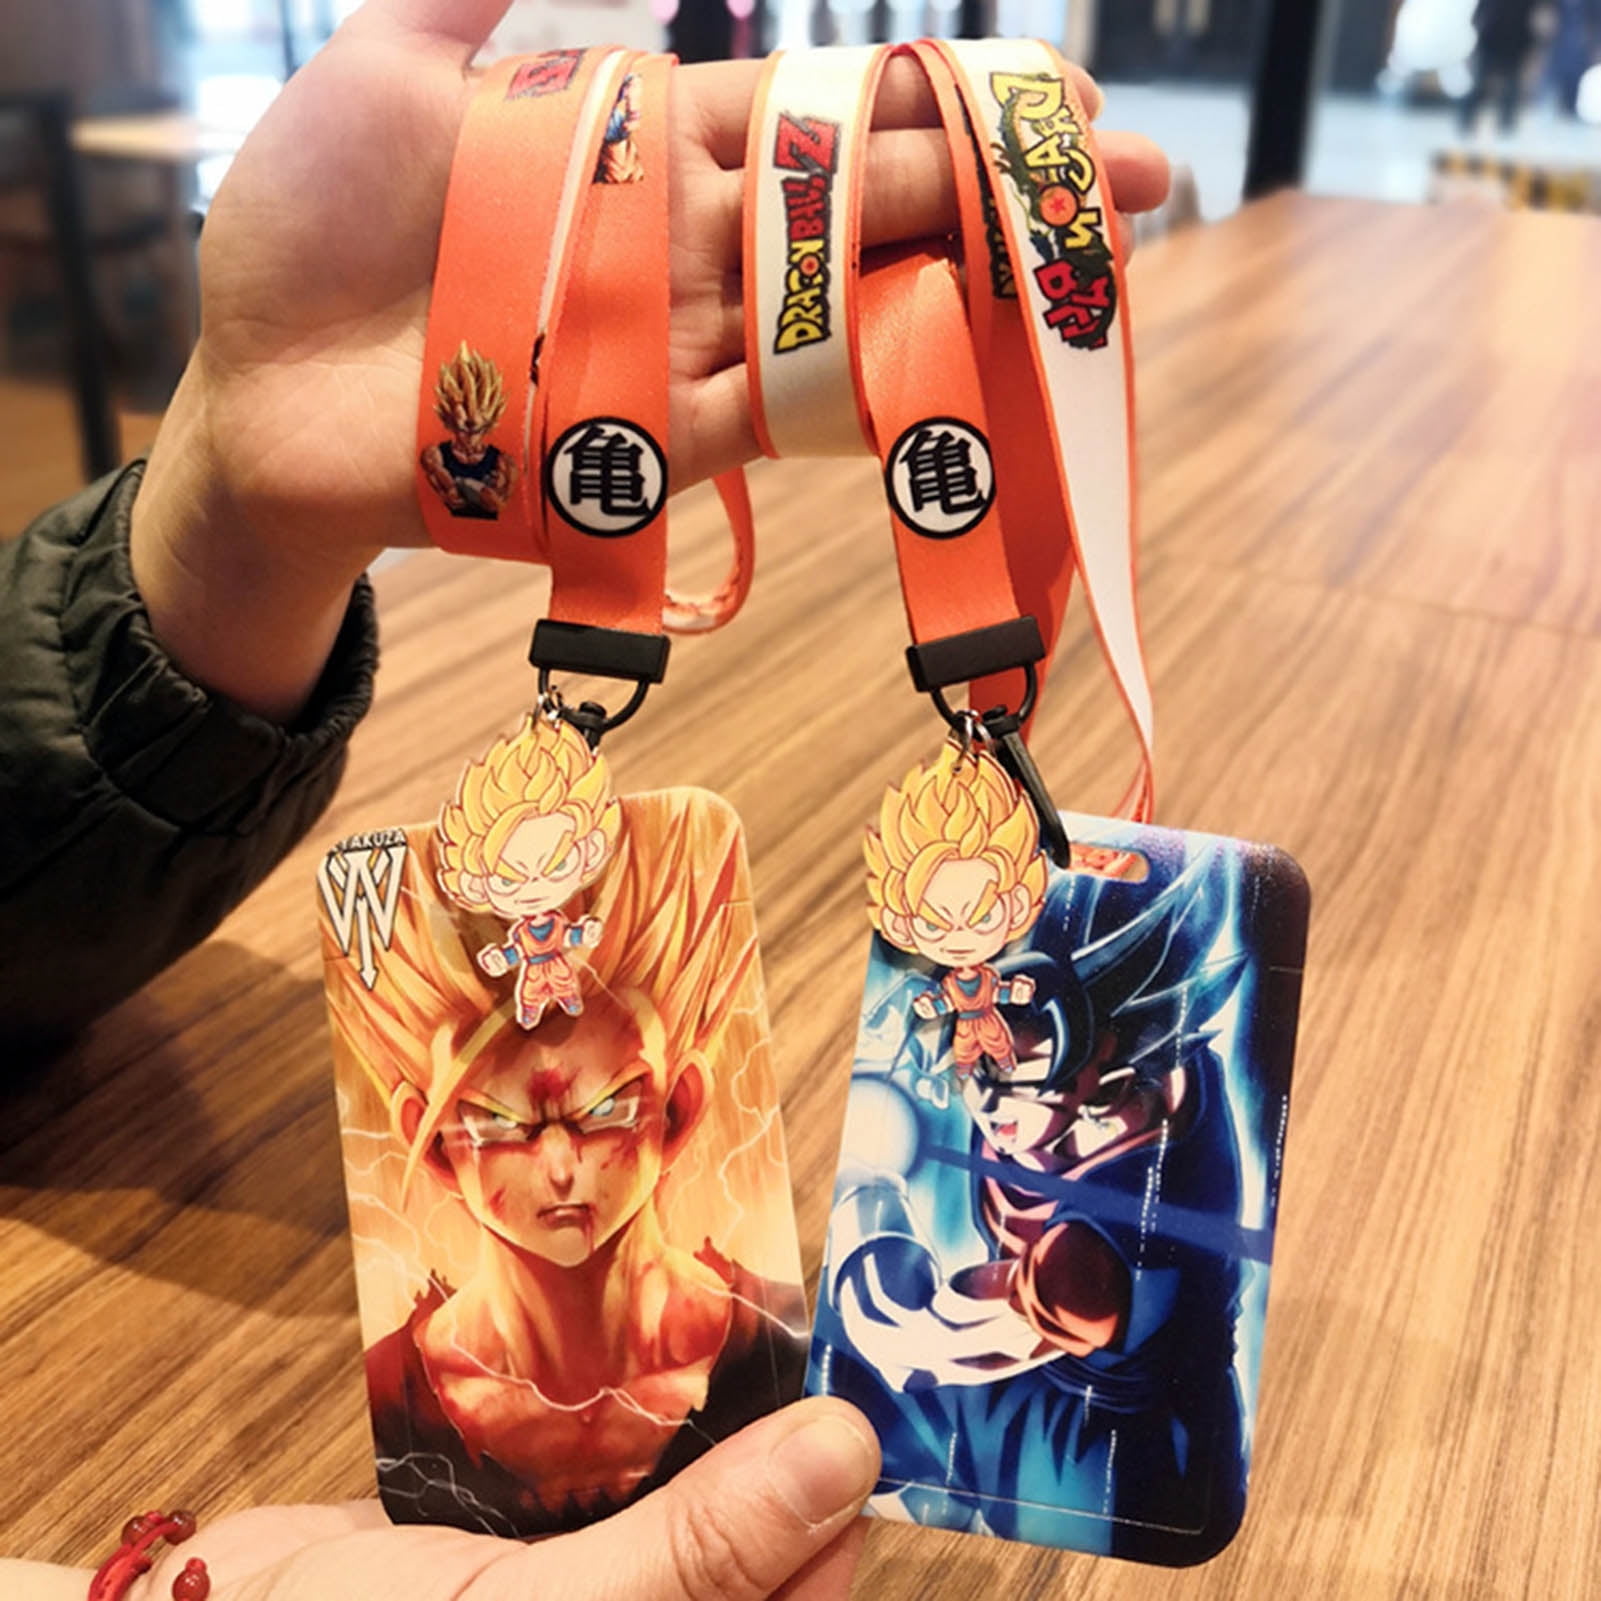 Riapawel 1 set Anime Card Cases card Lanyard Key Lanyard Cosplay Badge ID  Cards Holders Neck Straps Keychains goku and Vegeta